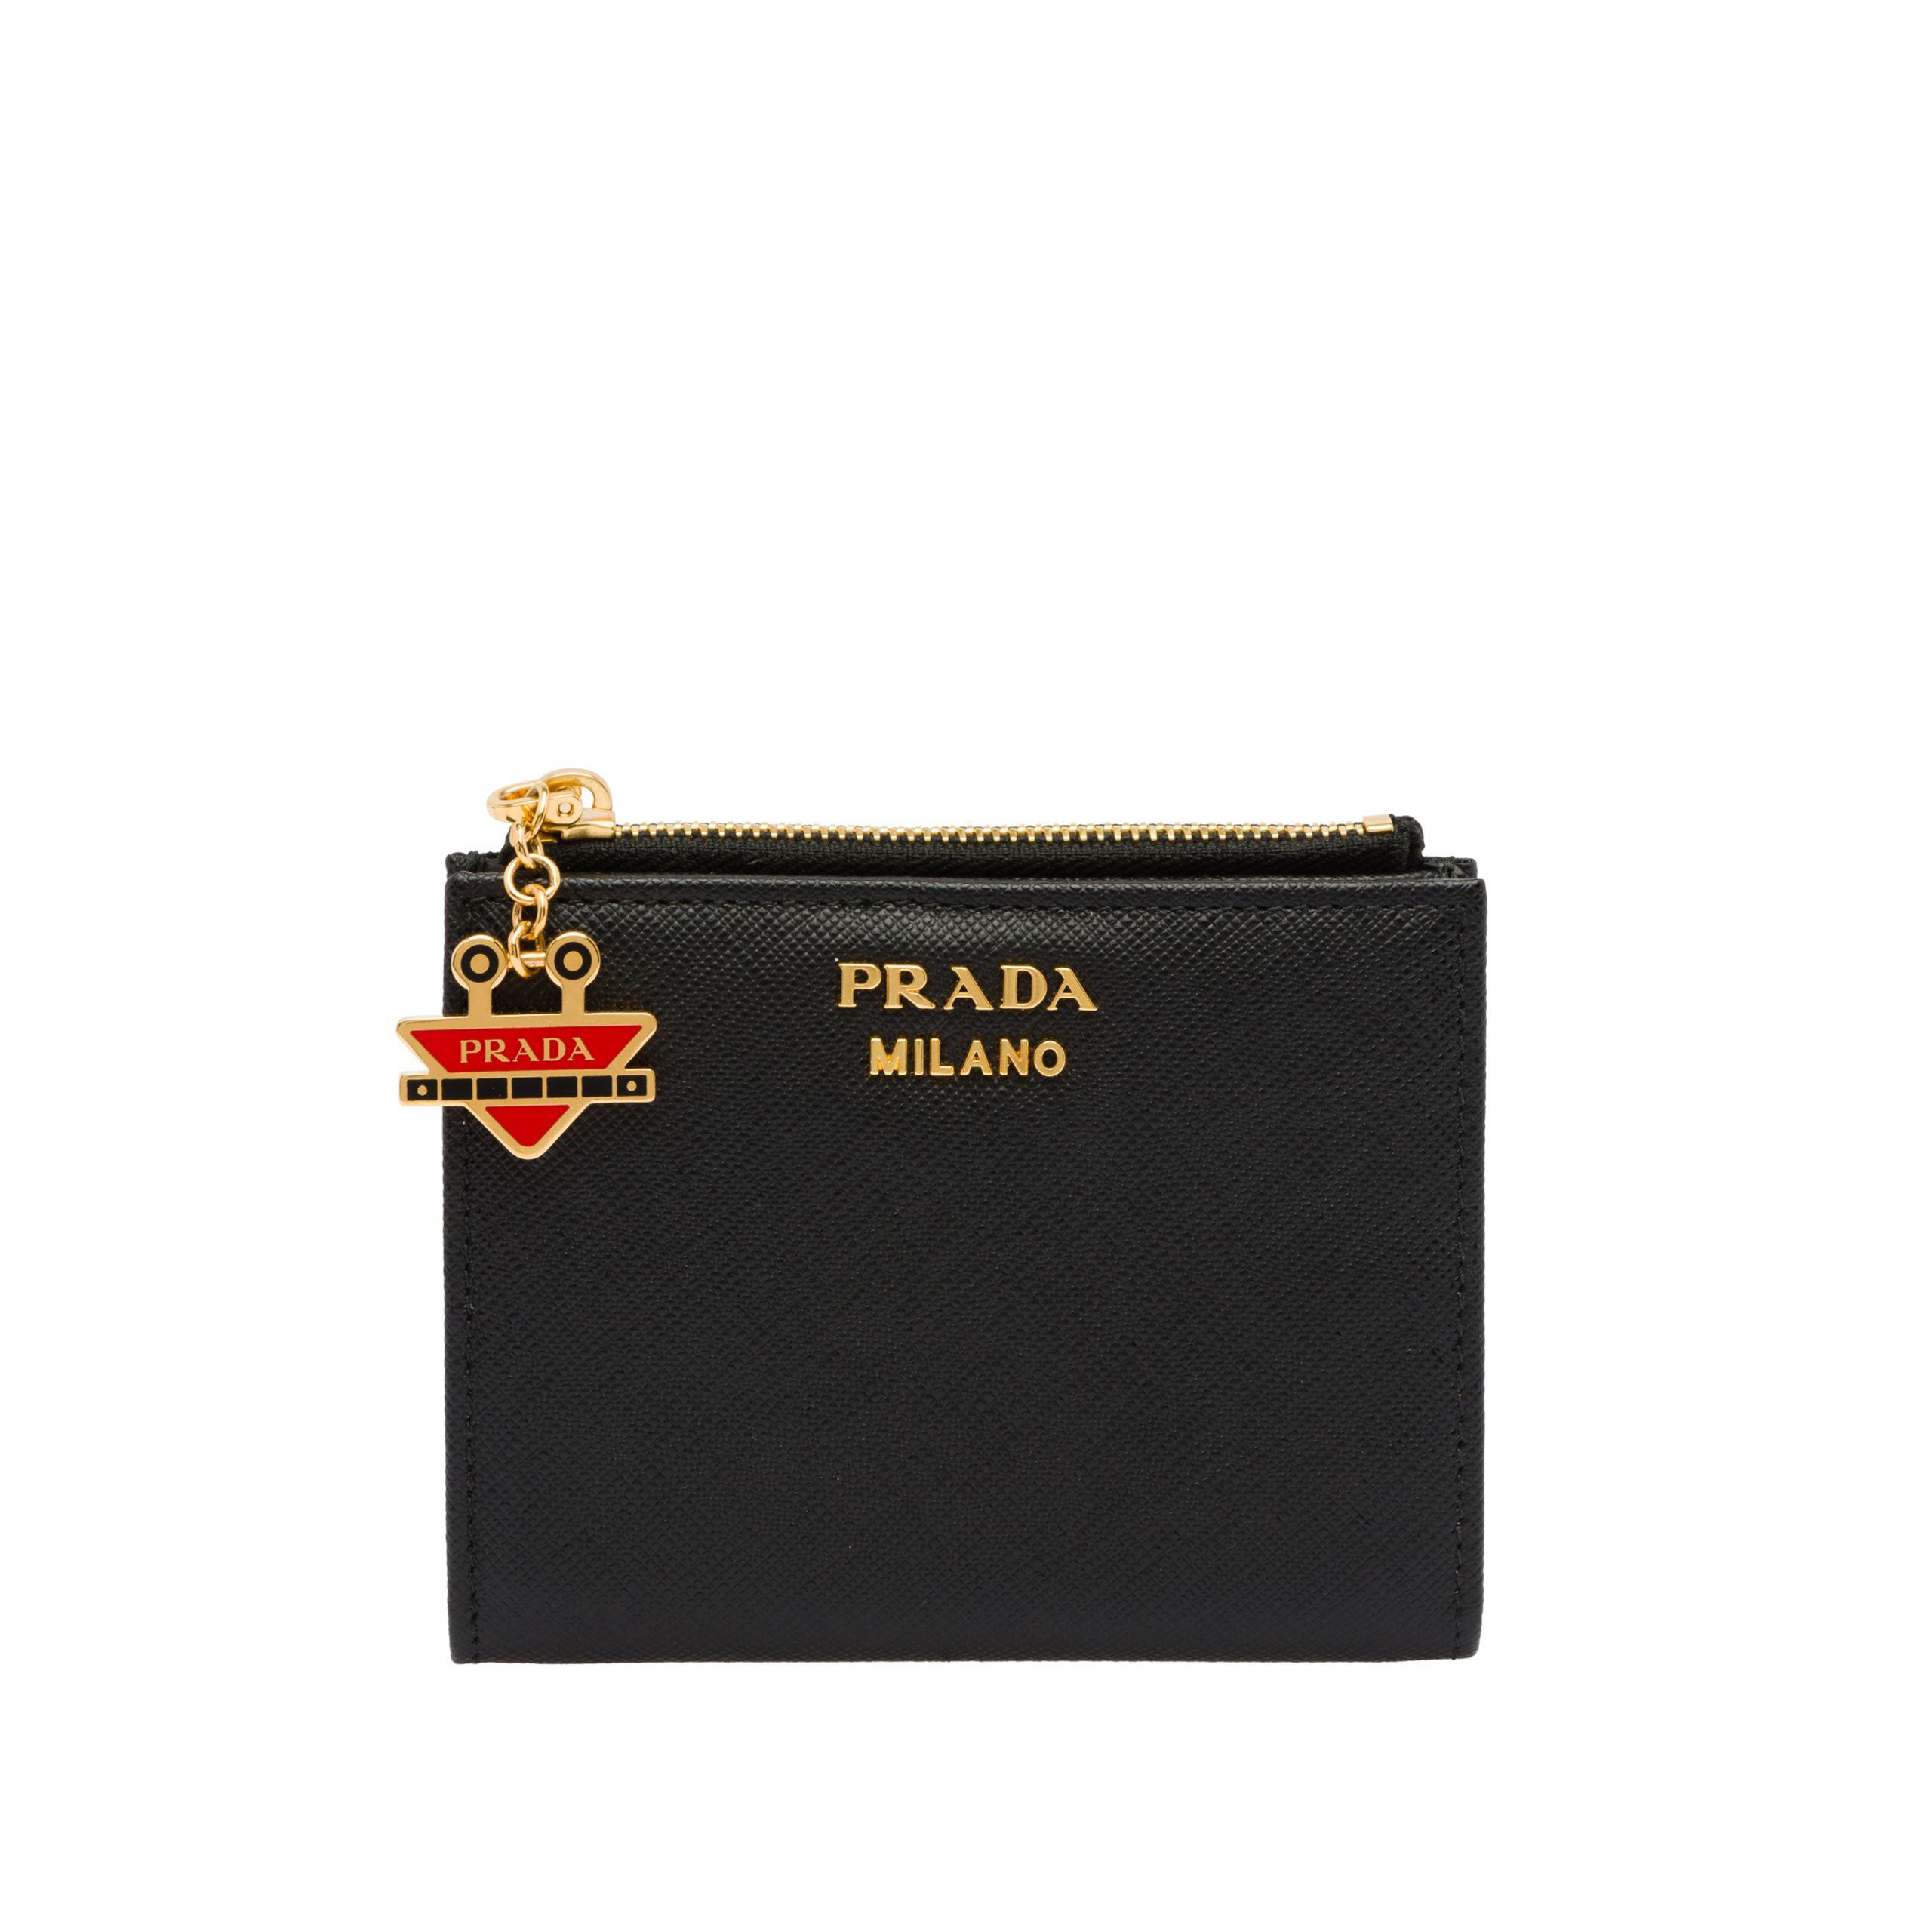 Prada Small Saffiano Leather Wallet in Black - Lyst